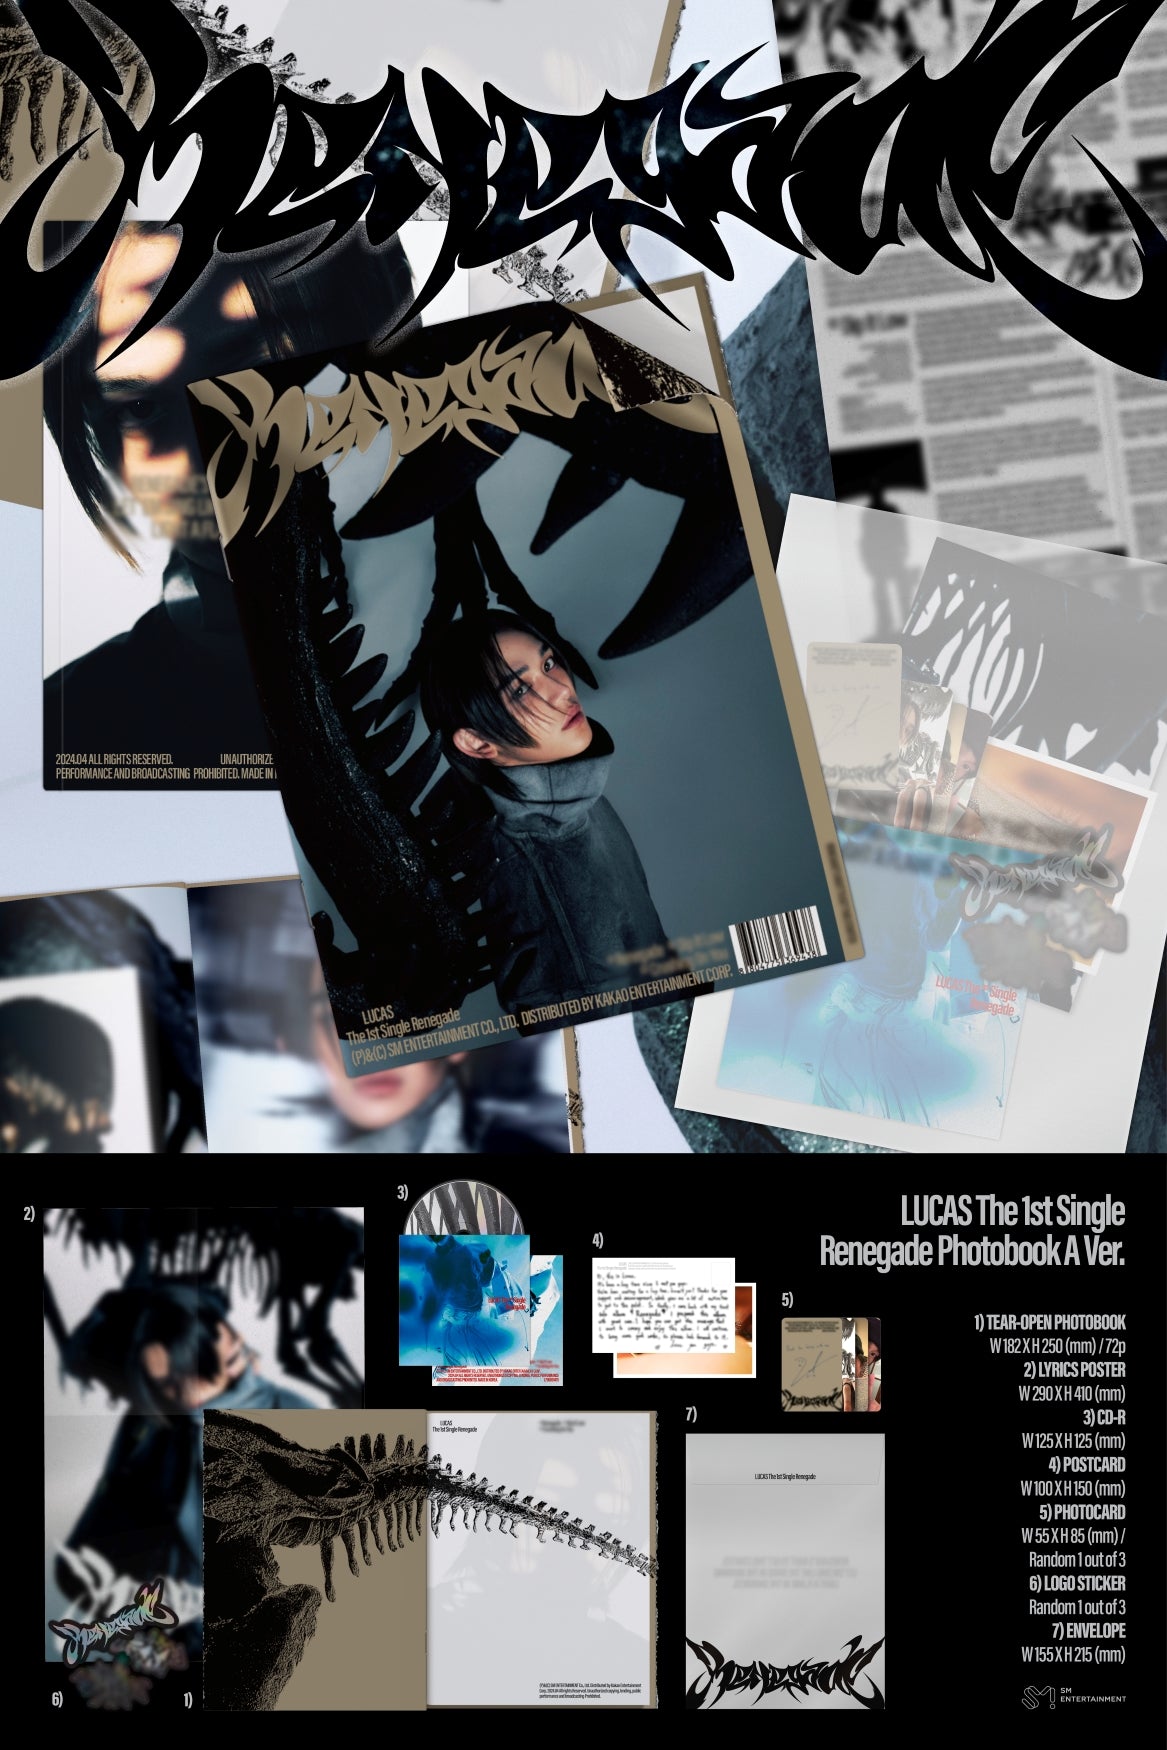 Lucas 1st Single Album Renegade - Photobook A Version Inclusions: Tear-open Photobook, CD, Lyrics Poster, Postcard, Photocard, Logo Sticker, Envelope